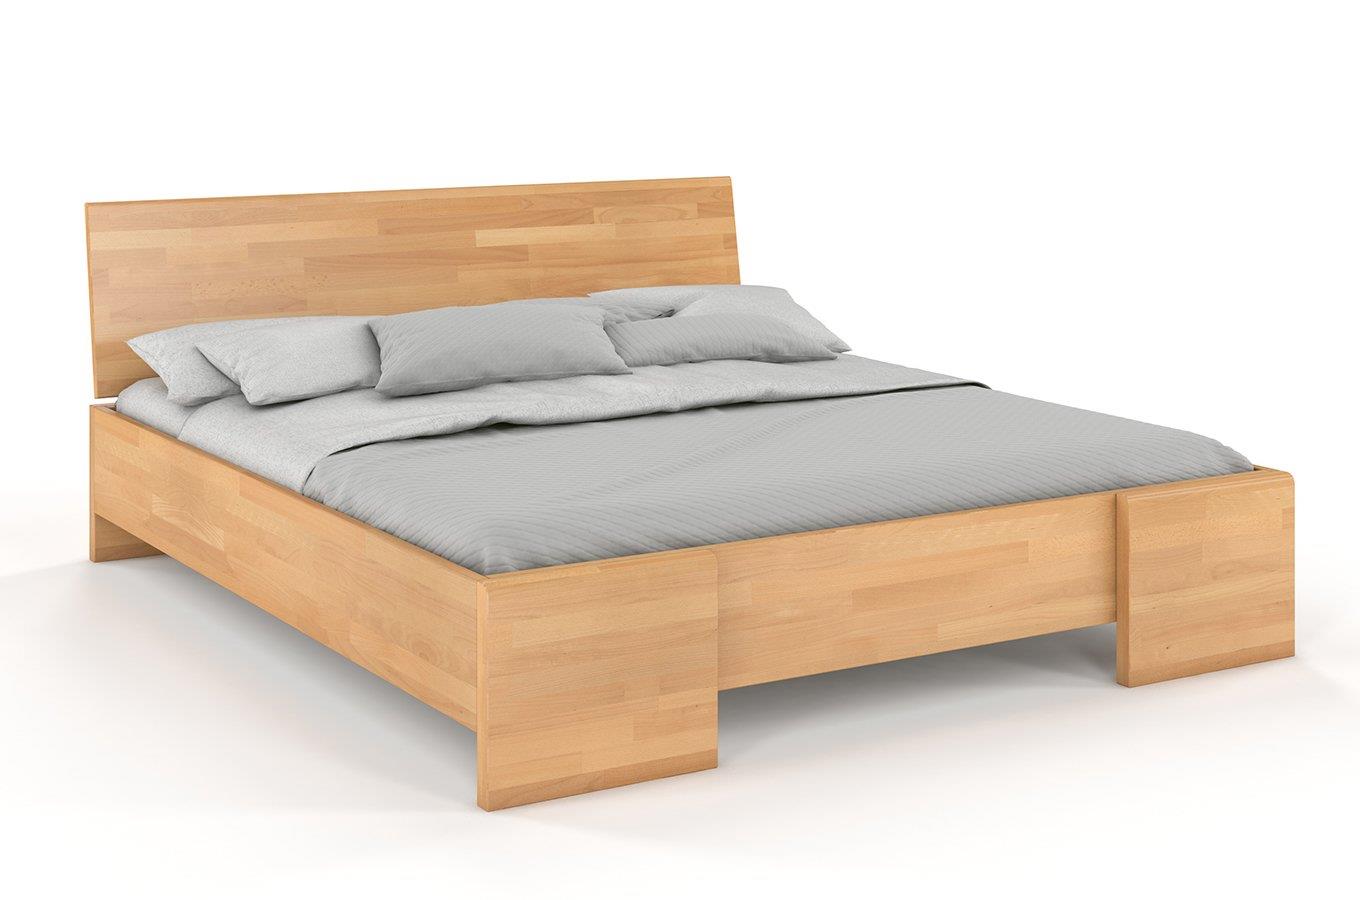 Łóżko drewniane bukowe Visby HESSLER High & LONG (długość + 20 cm) / 160x220 cm, kolor naturalny